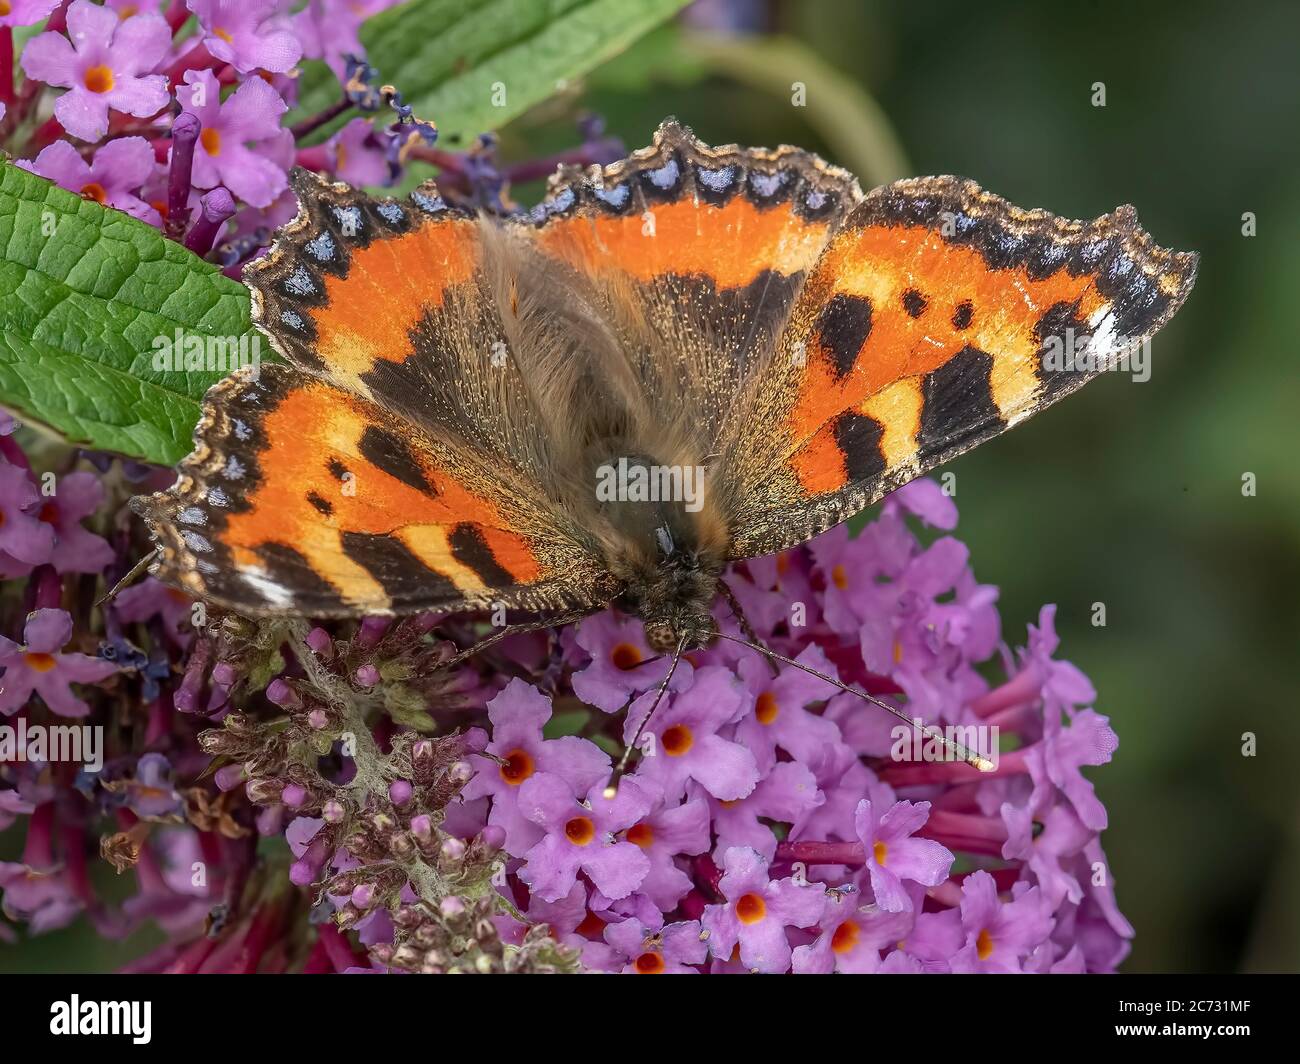 Tortiseshell Butterfly Foto Stock